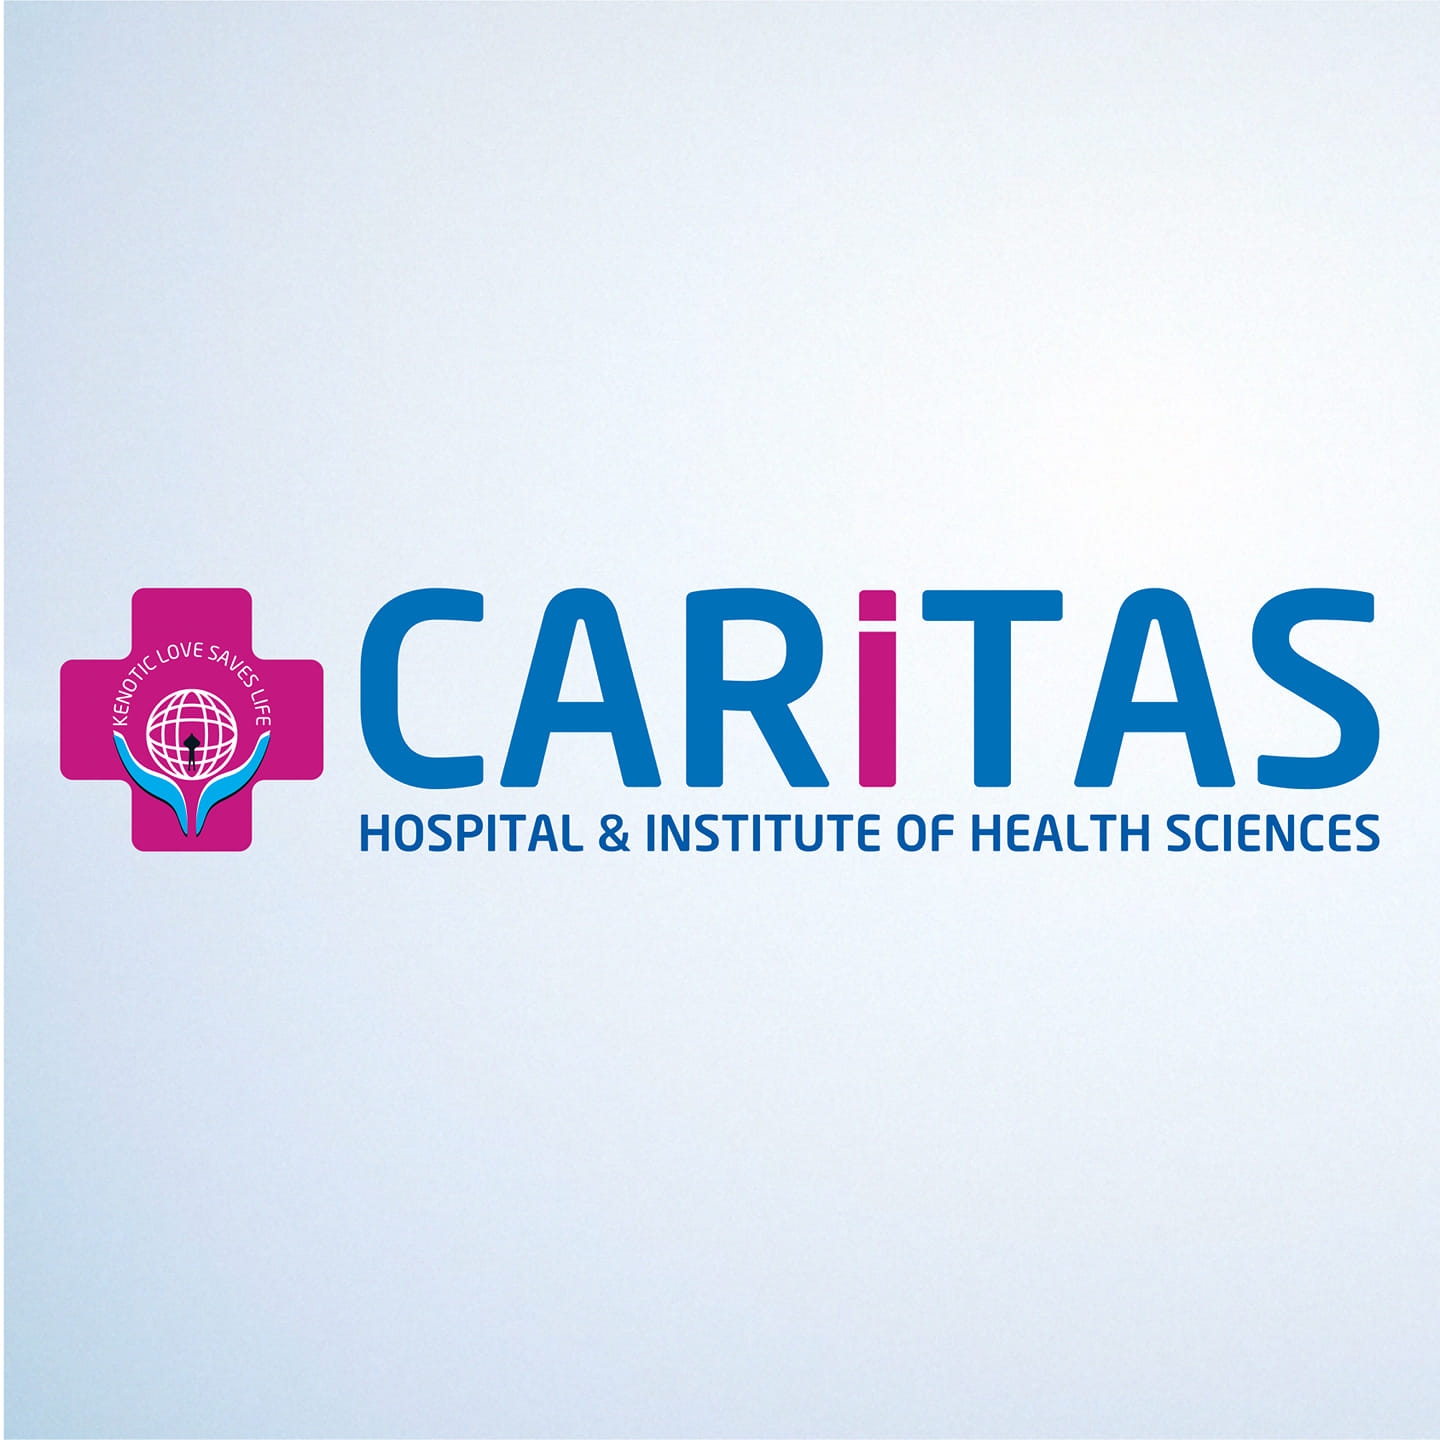 Caritas Multispeciality Hospital|Diagnostic centre|Medical Services